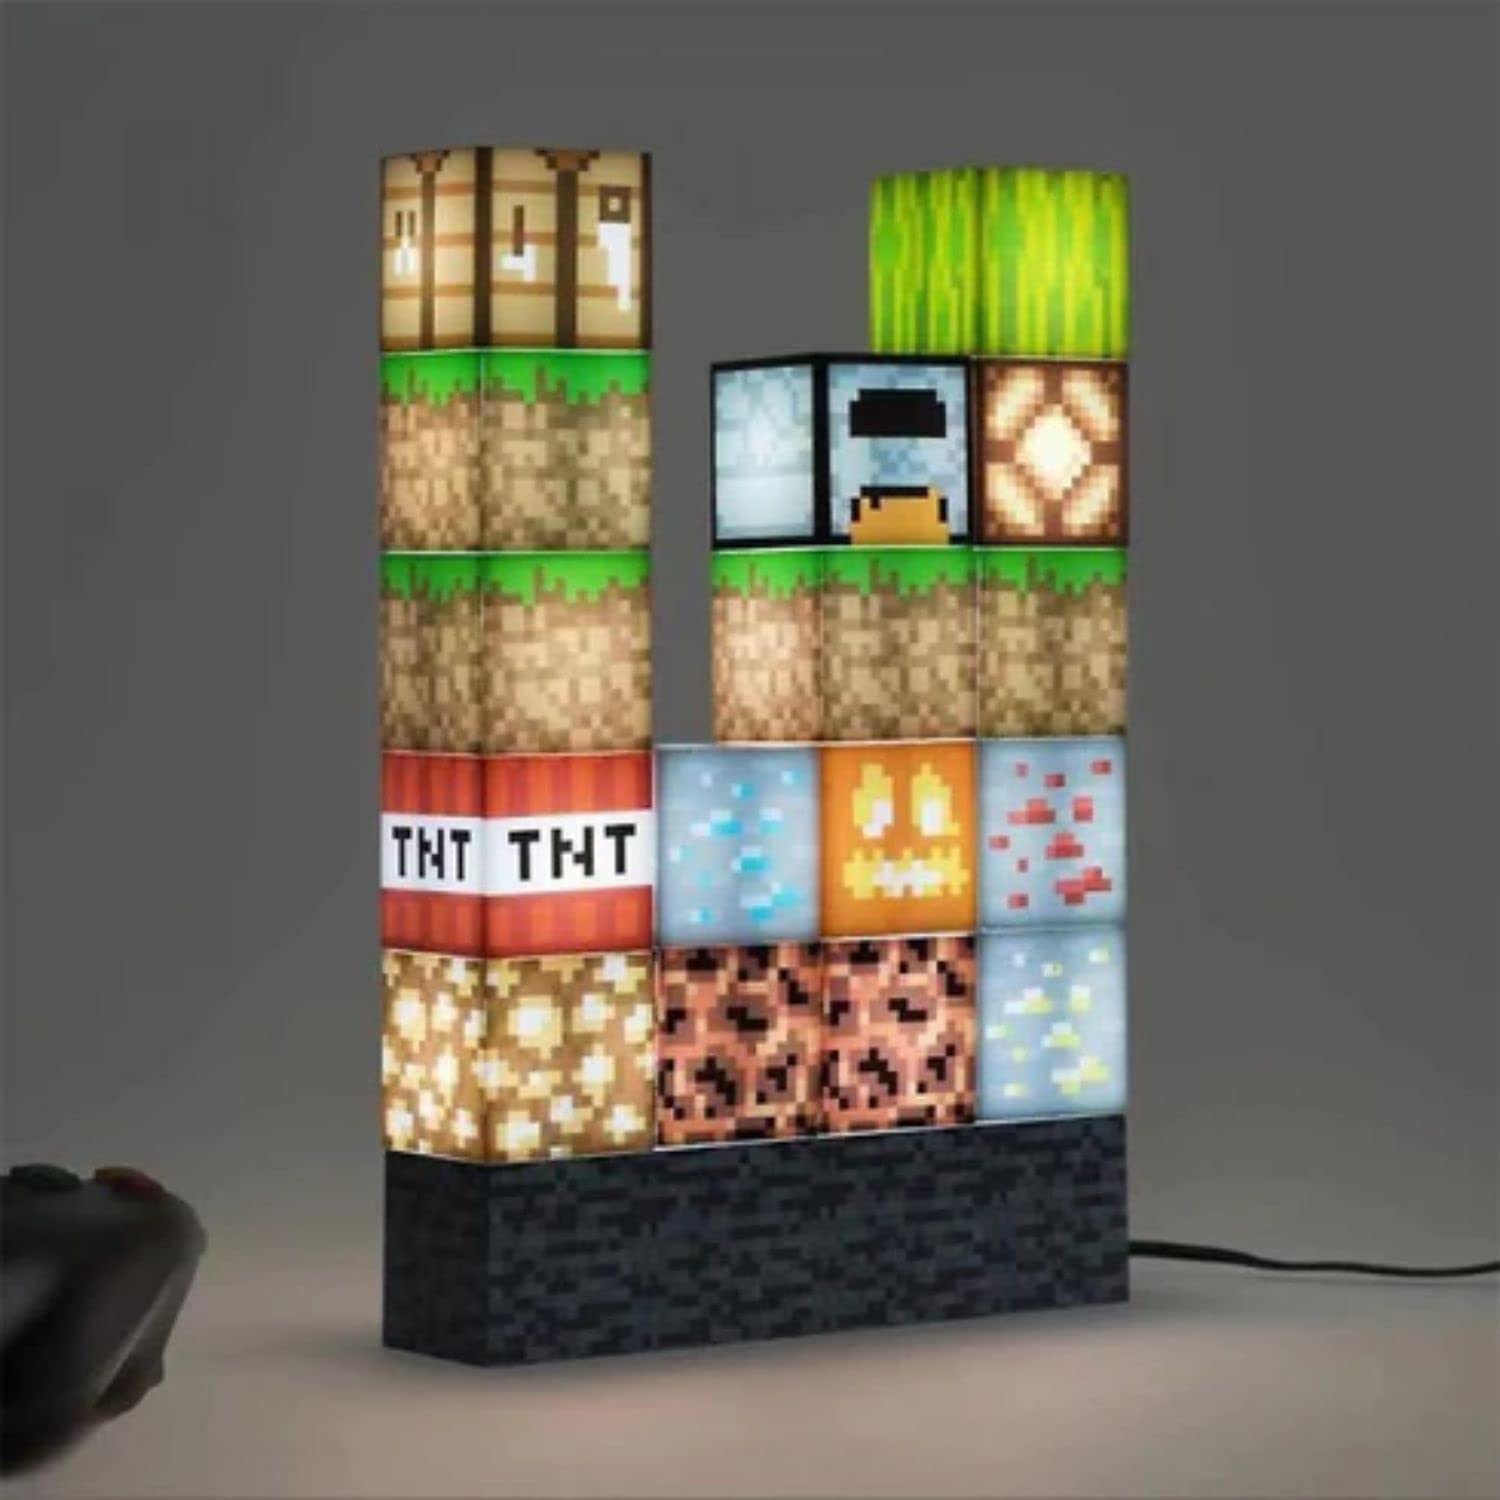 KIDS MANDI beautiful lighting building blocks with rearrangeable light blocks.